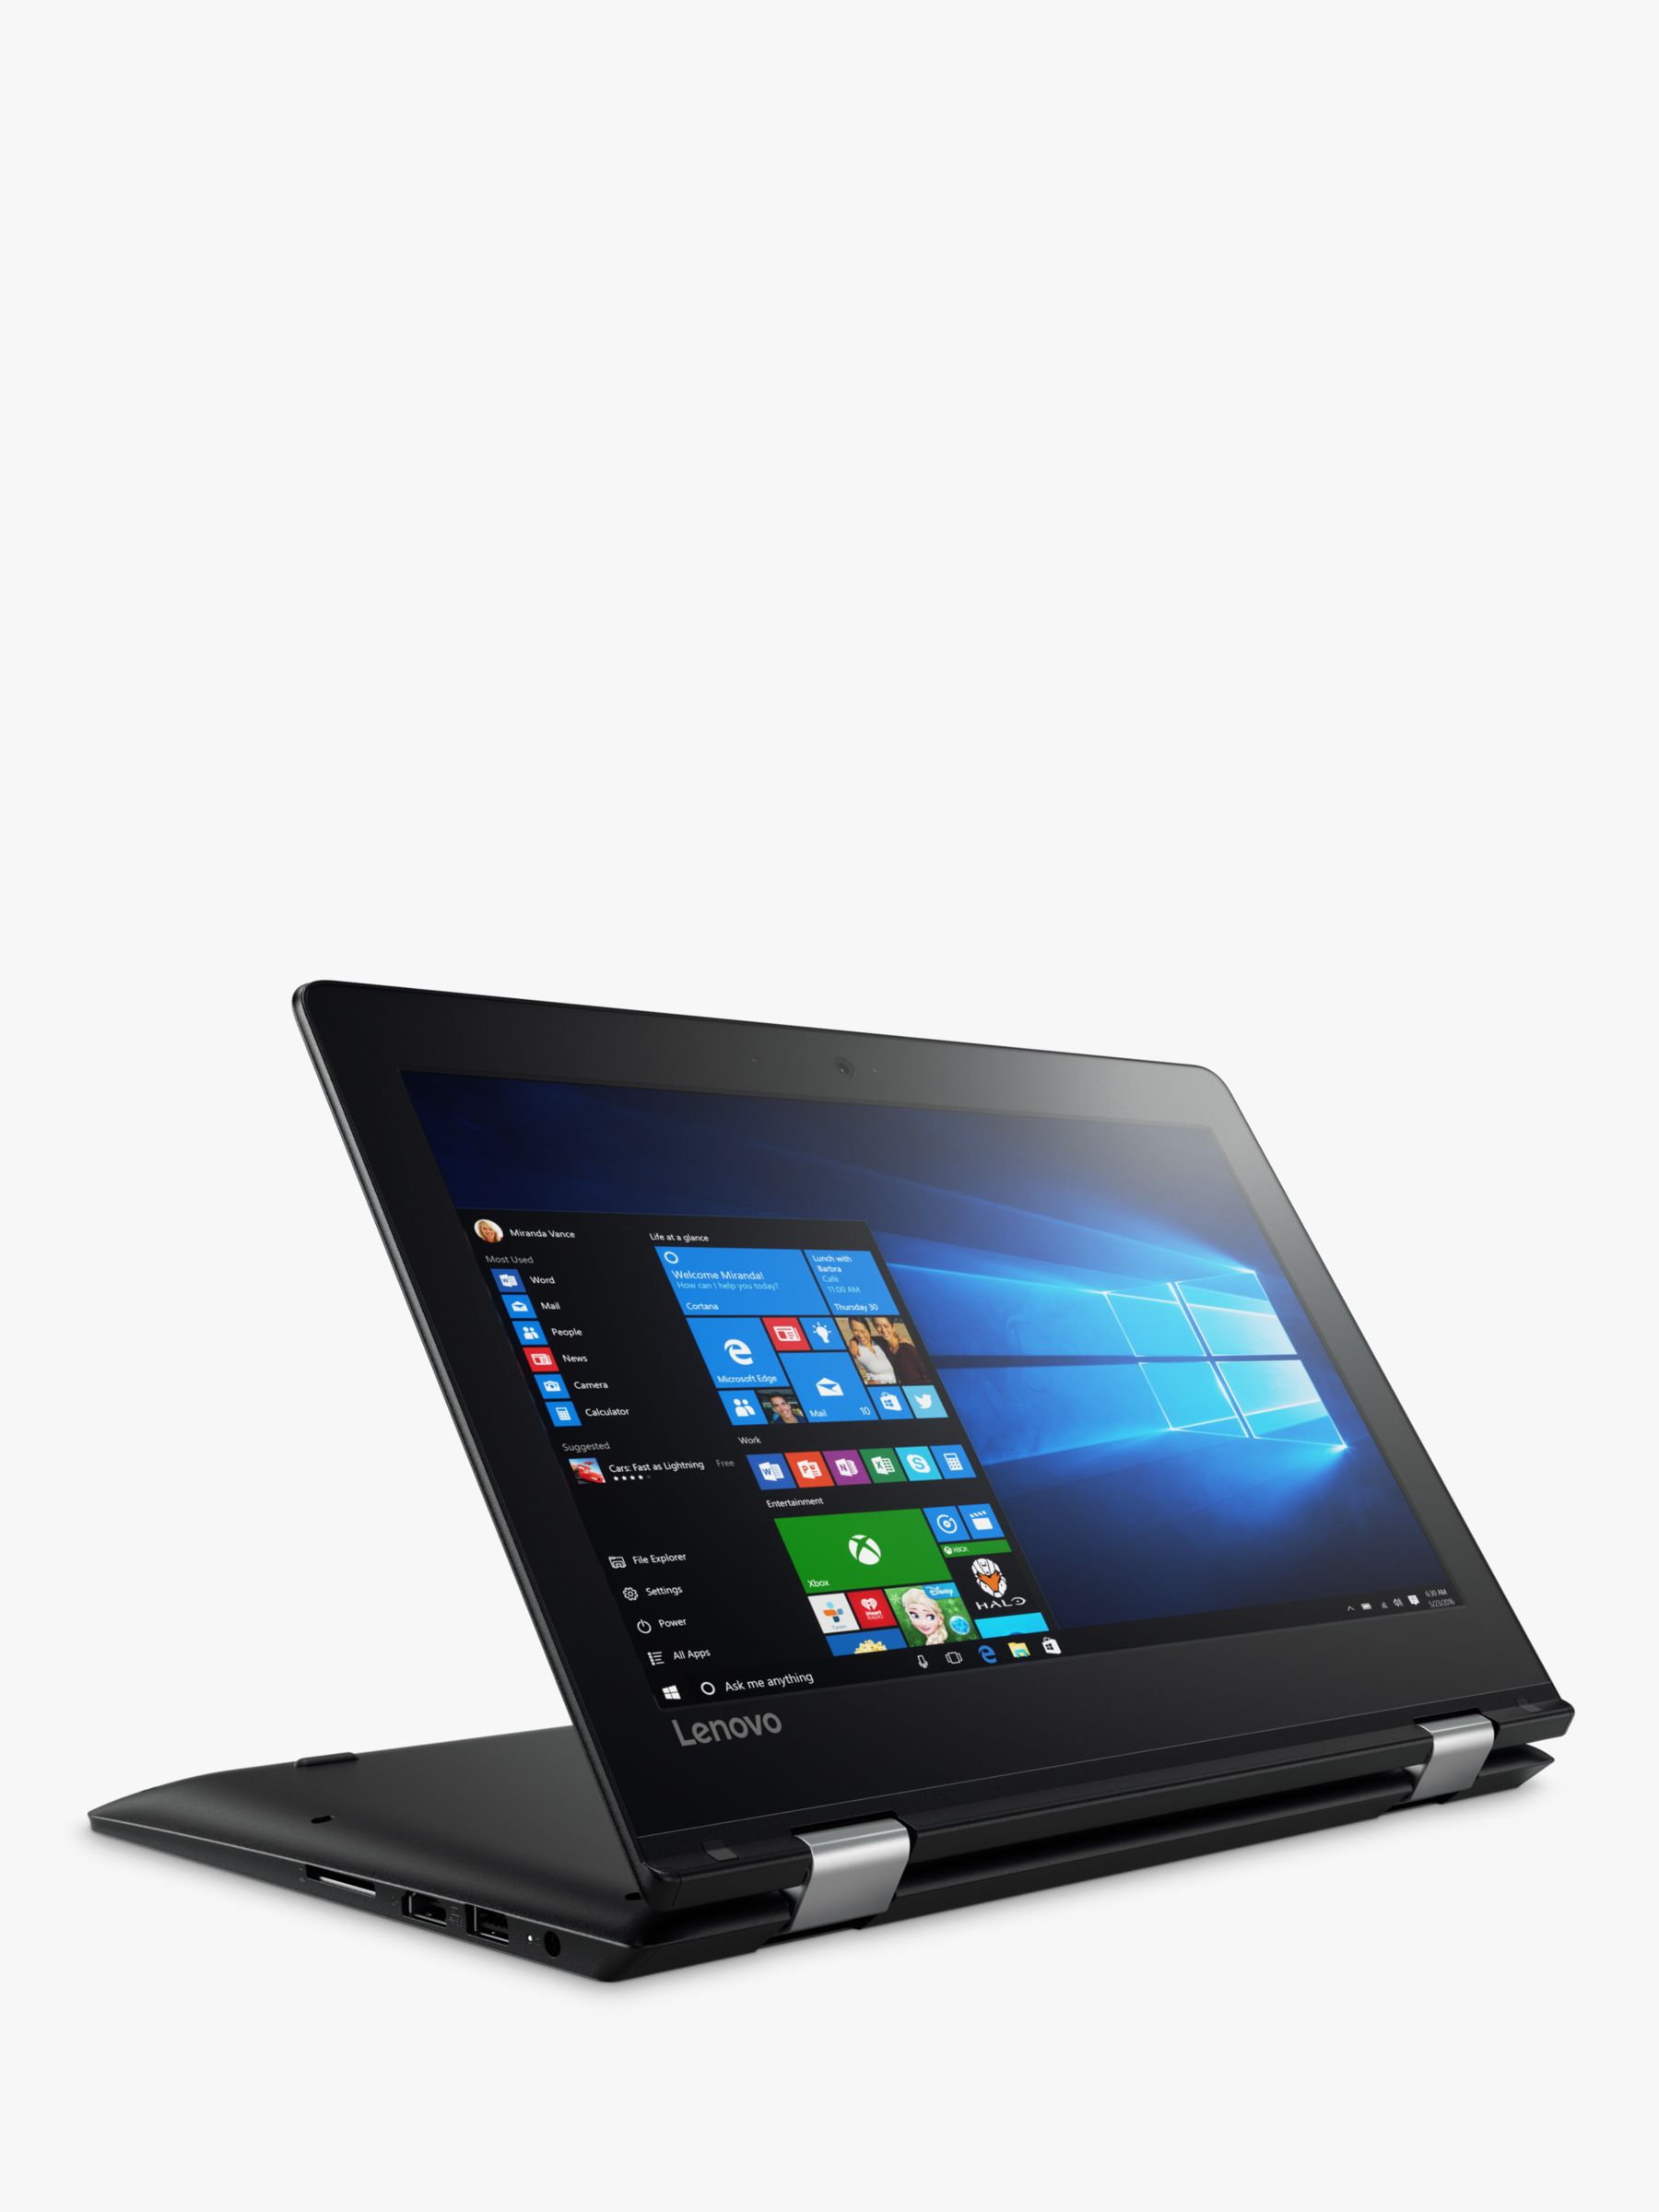 Lenovo Yoga 310 Convertible Laptop, Intel Pentium, 4GB, 32GB eMMC, 11.6”, Black